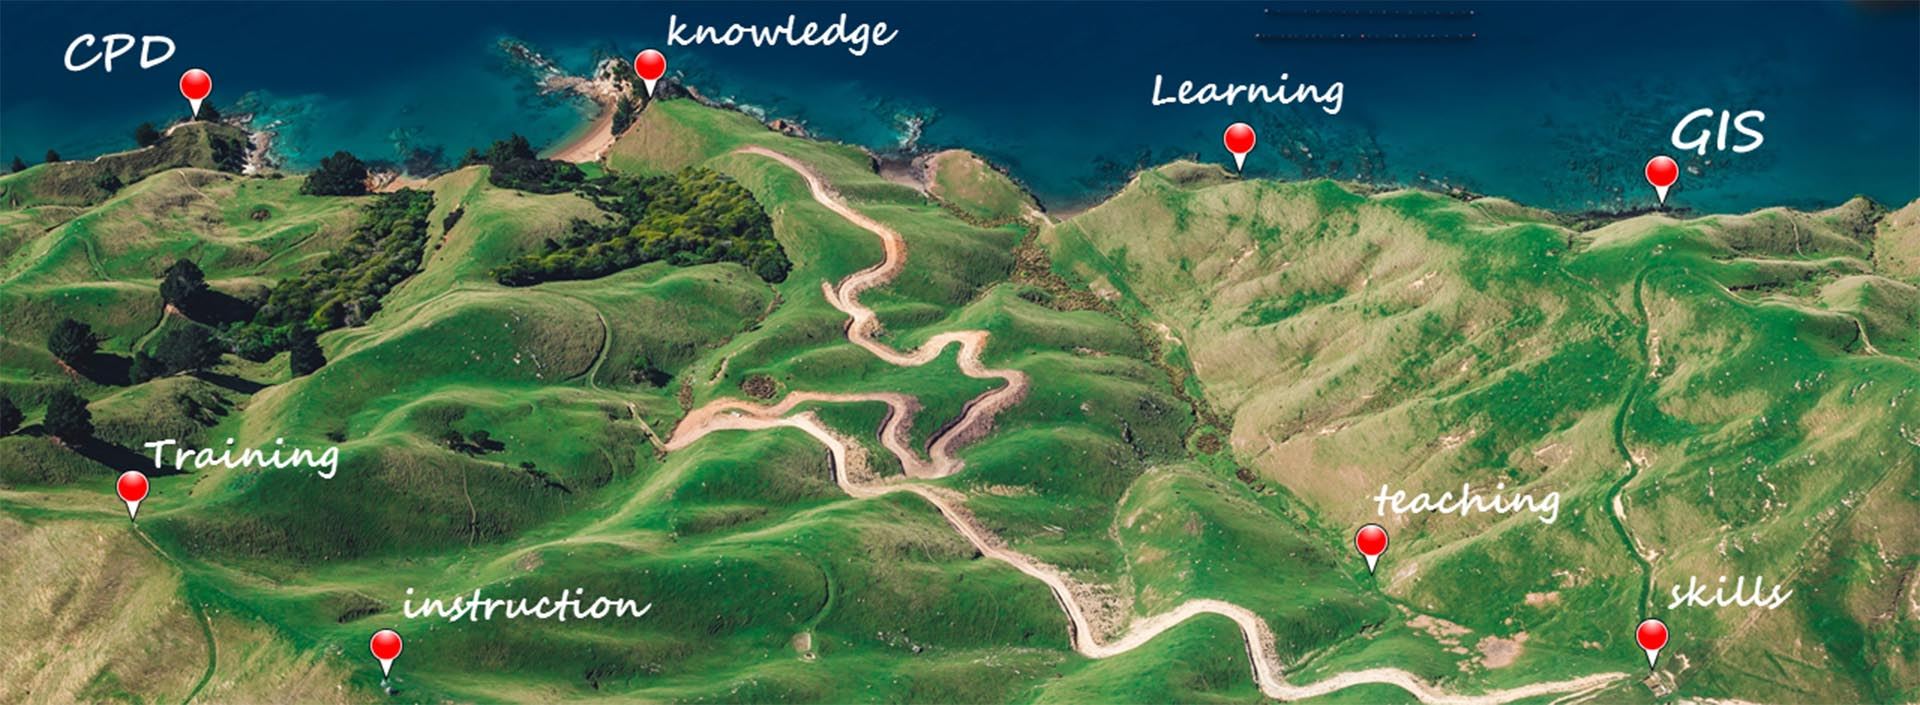 Slide 3 - Map showing GIS Training key points